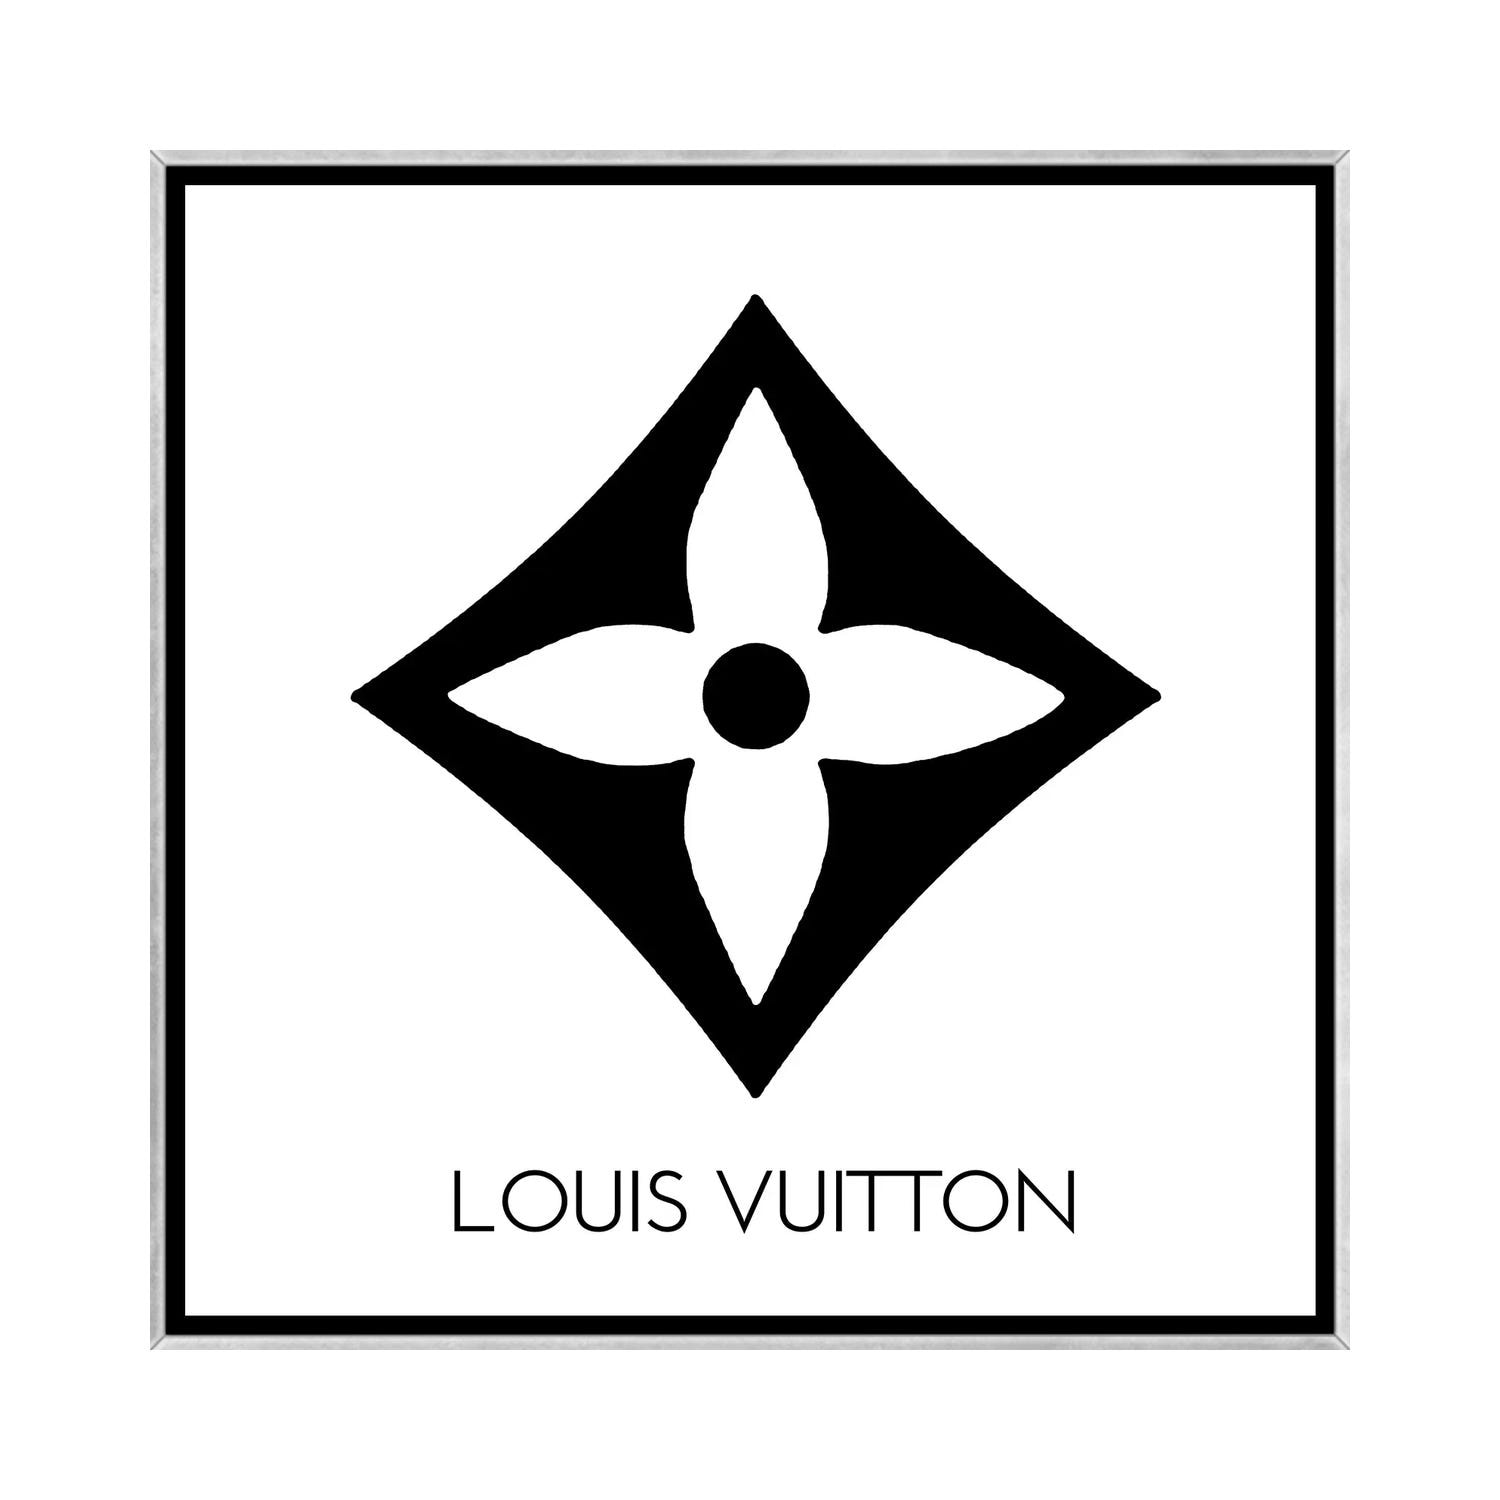 Louis Vuitton Colored Art Print By Art Mirano